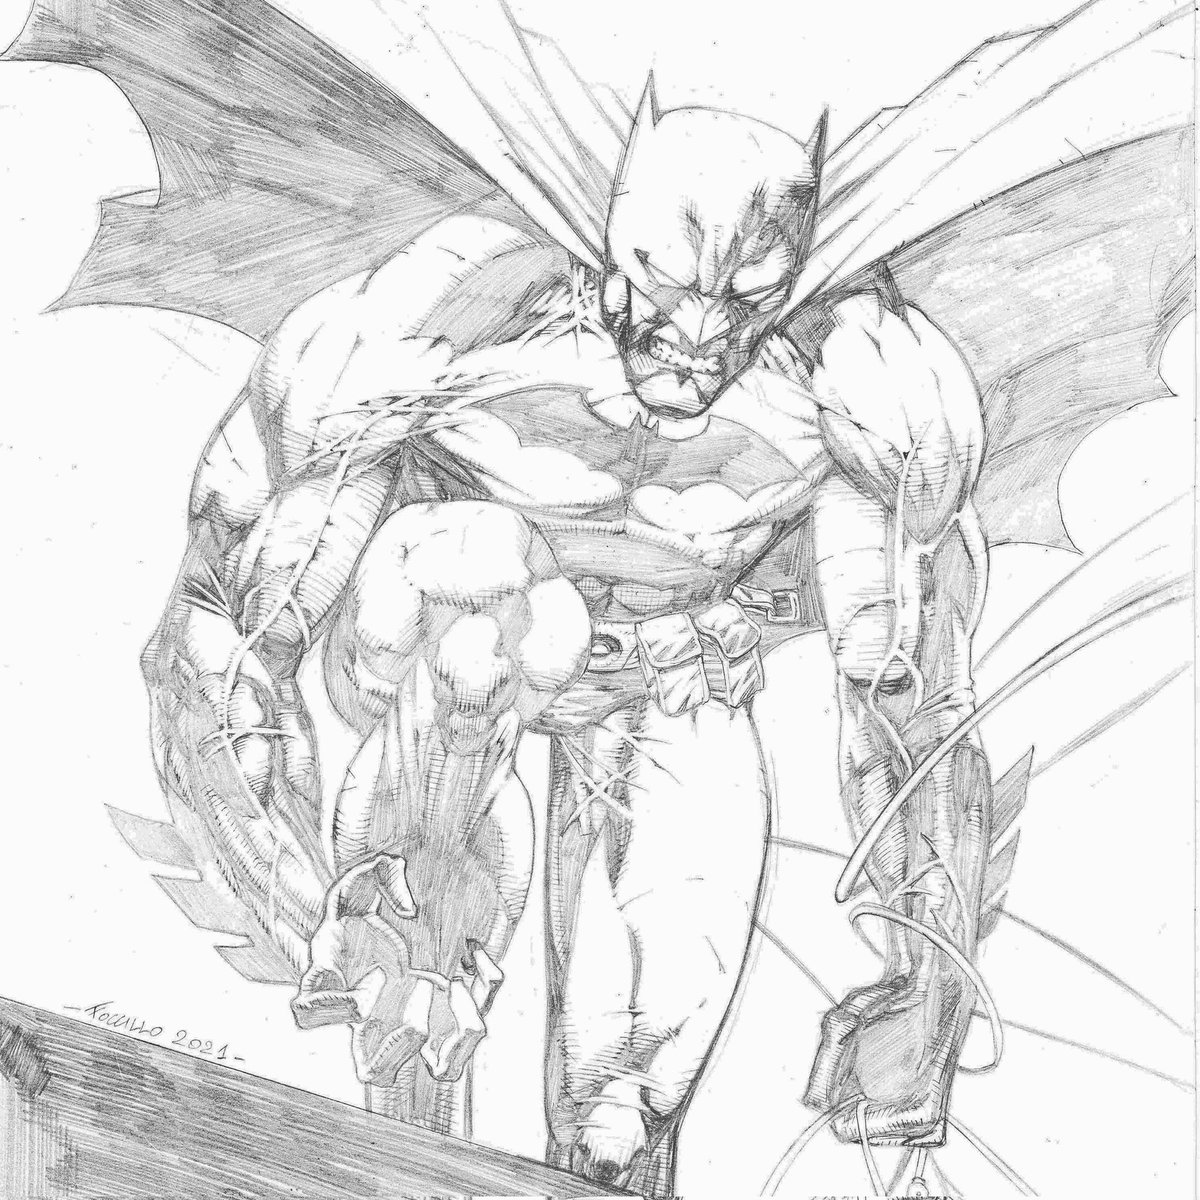 It's officially #batweek
So I will share my #Batman art every day. Let's start with some black and white
@Demonpuppy @Spawners218 @BRIANMBENDIS @TylerKirkhamArt @DarrickPatrick @theaginggeek @WeirdScienceDC #dccomics #TheBatman #TheBatmanMovie